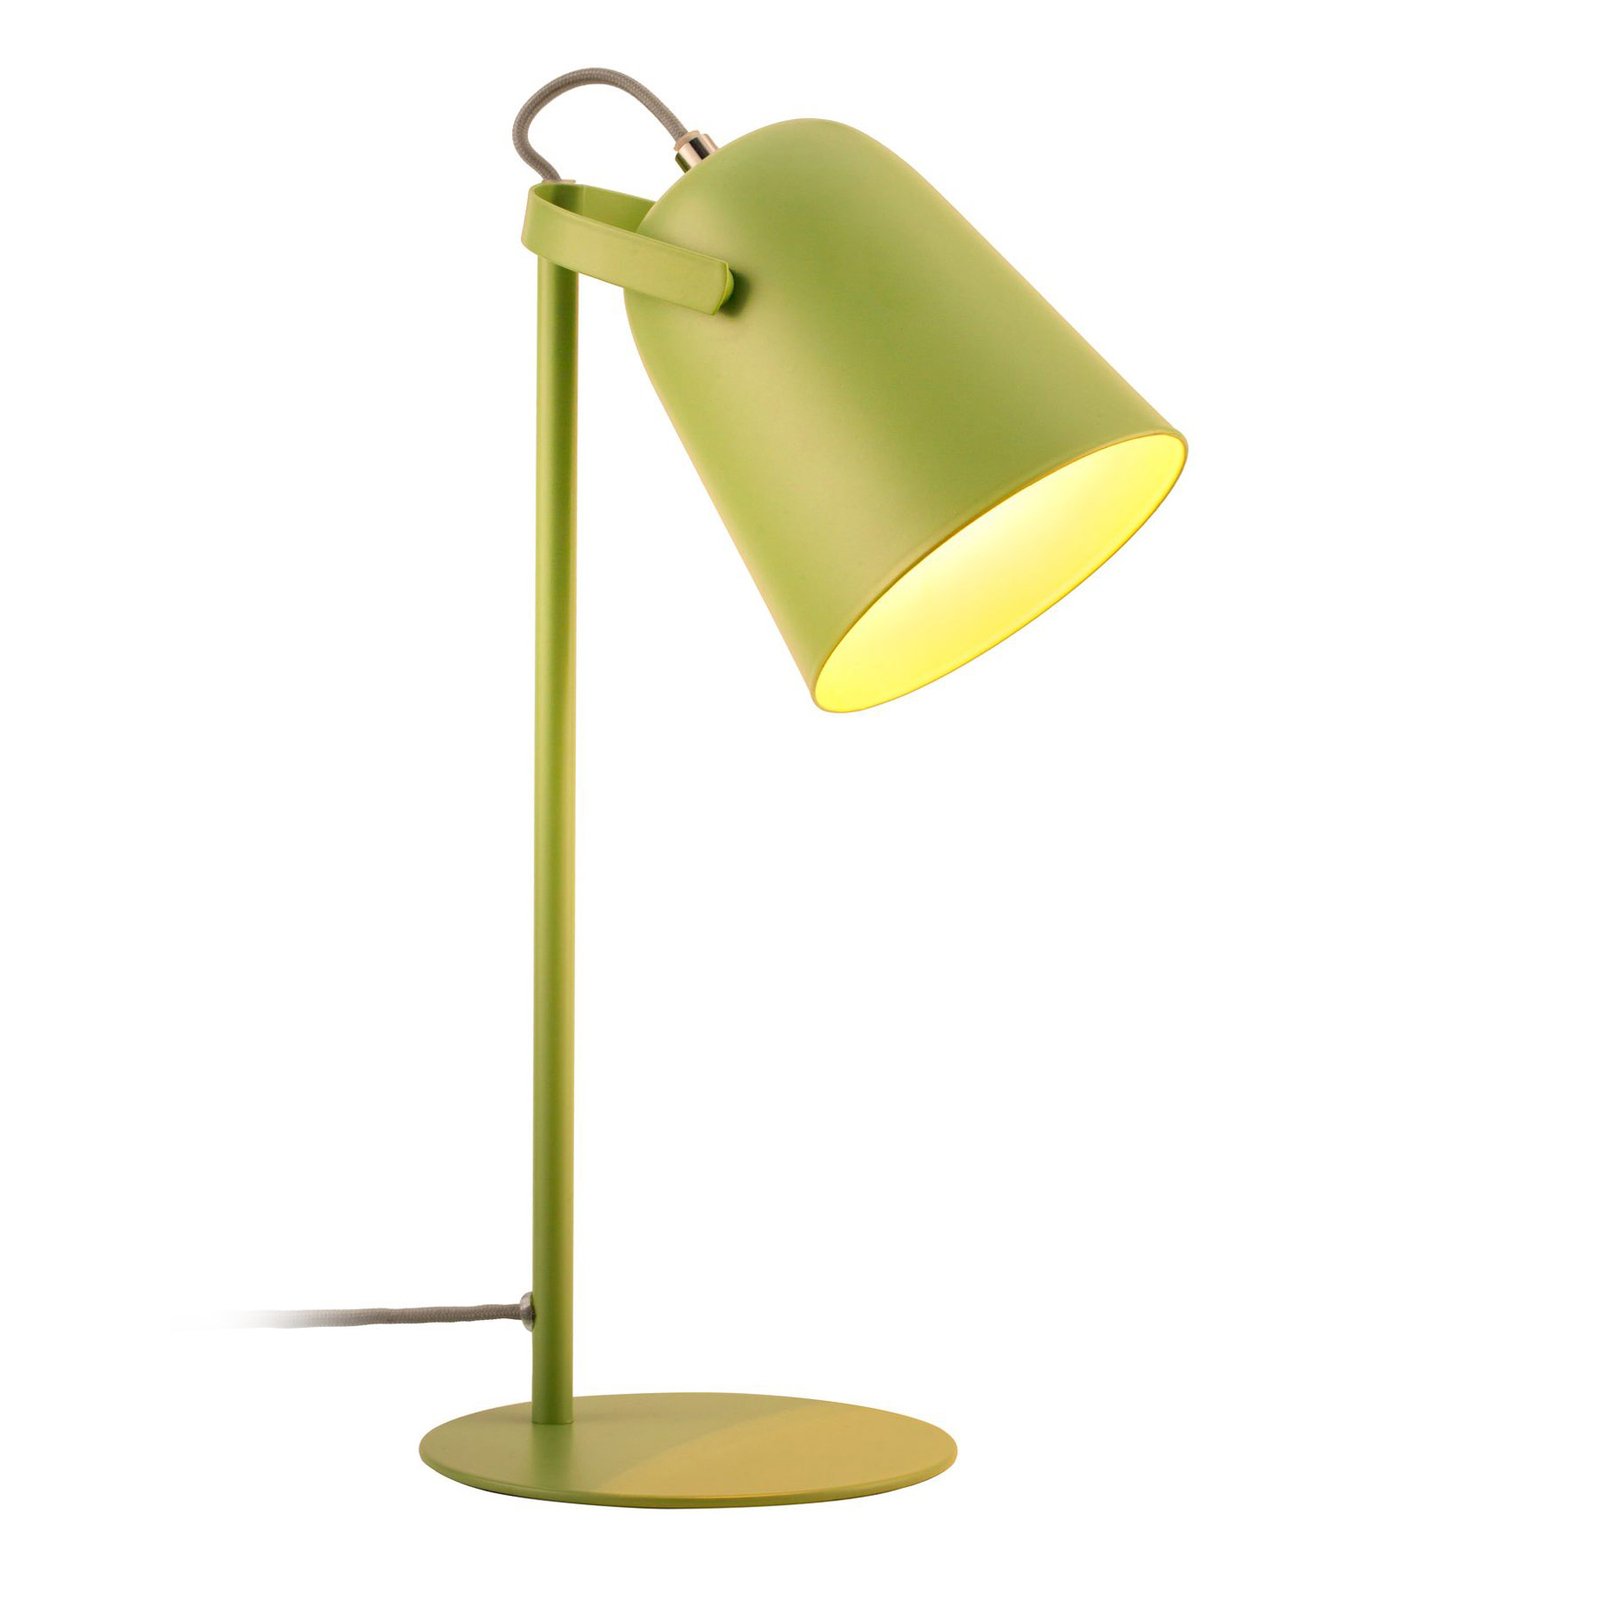 Pauleen True Pistachio bordslampa i grönt